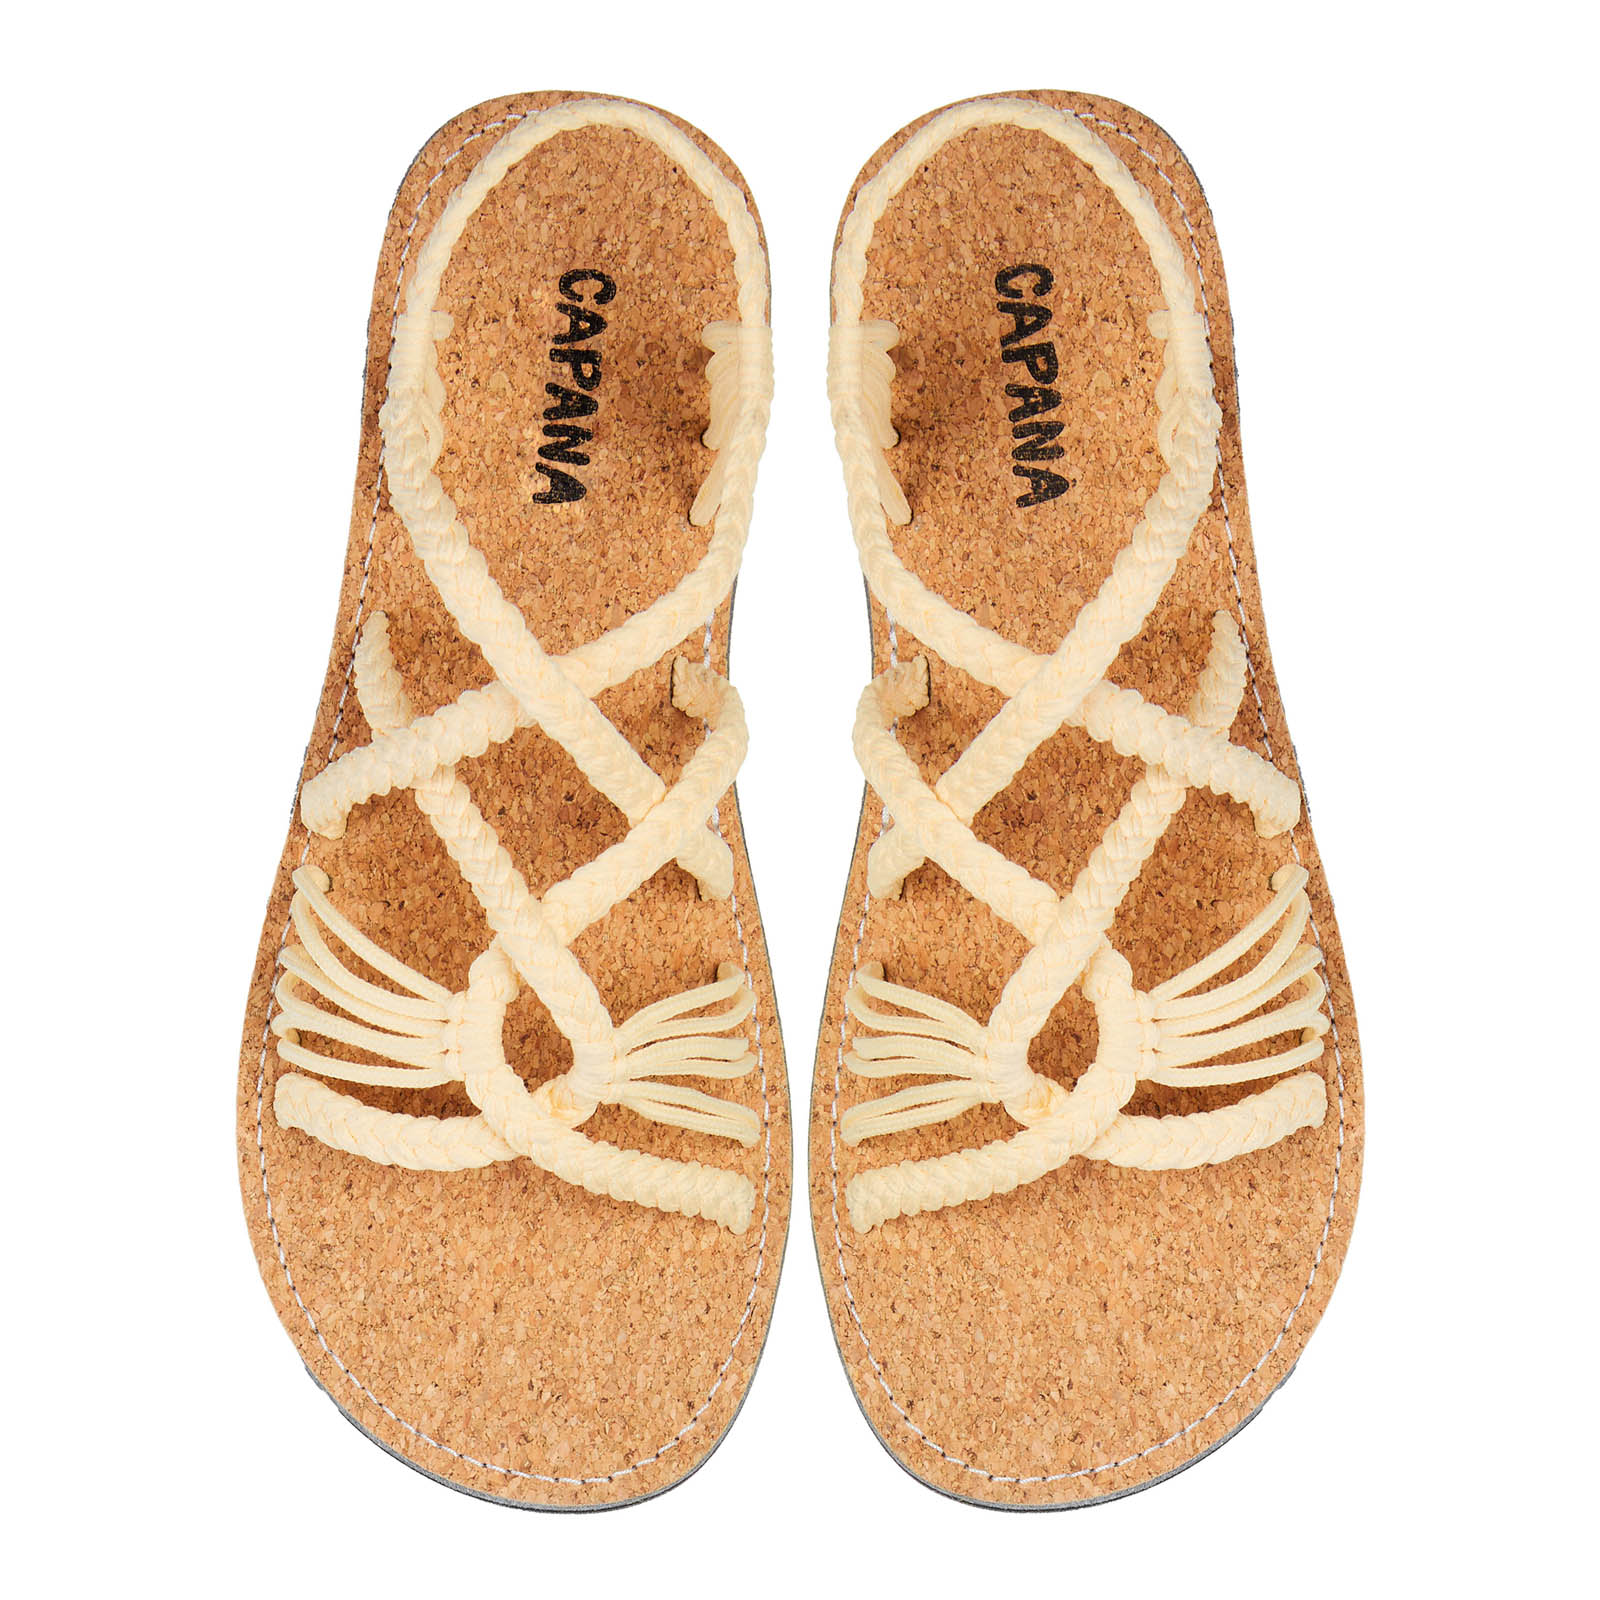 Relax Cream Cork Rope Sandals Egg shell Open toe wider design Flat Handmade sandals for women